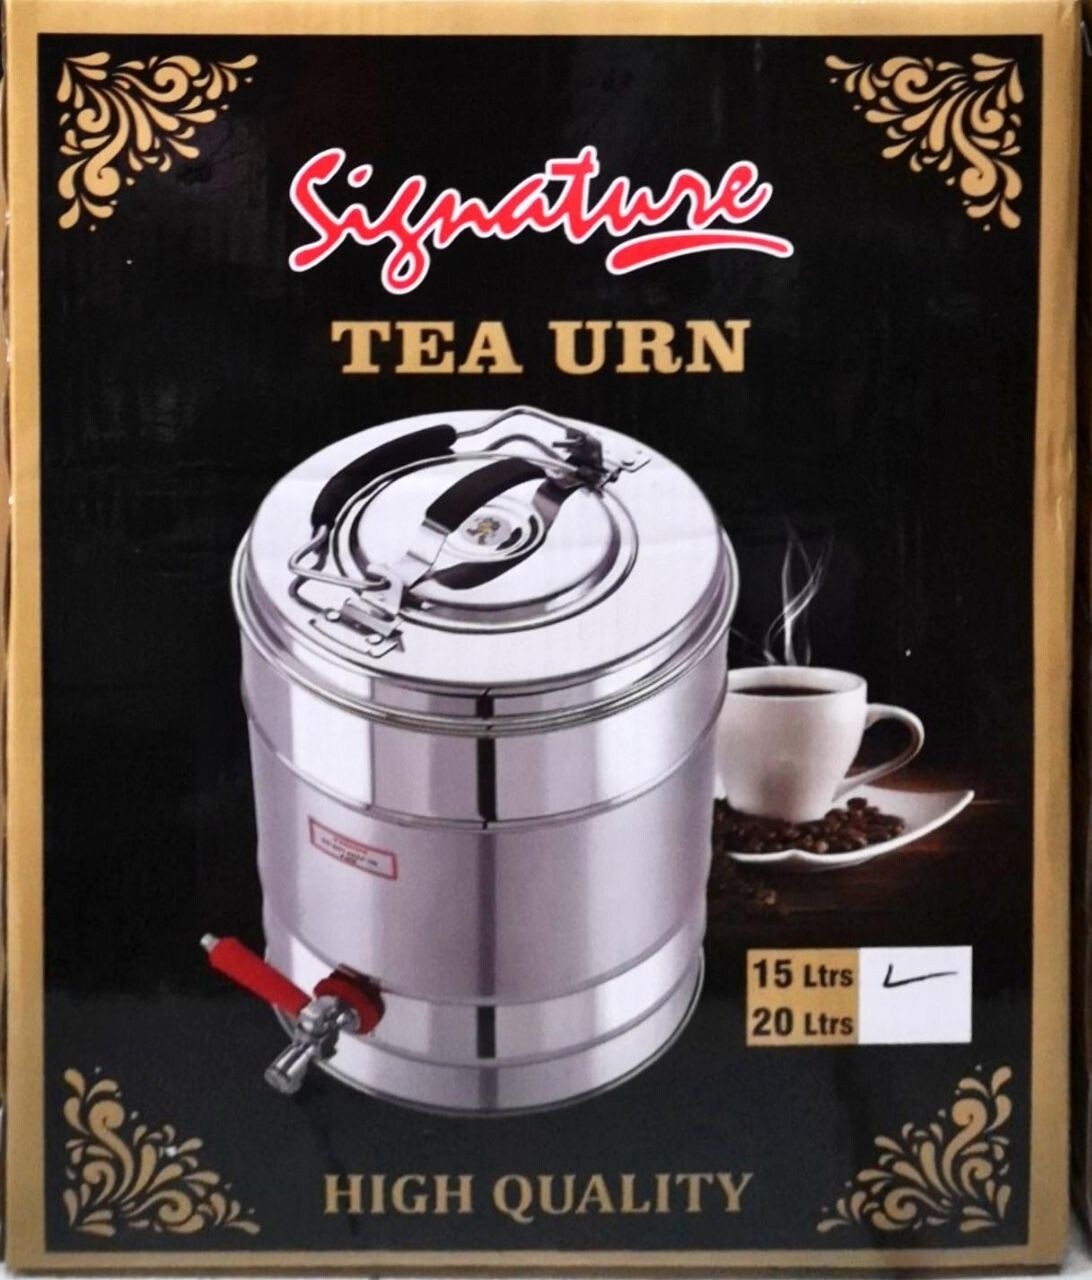 Signature non electeic tea urn 15L